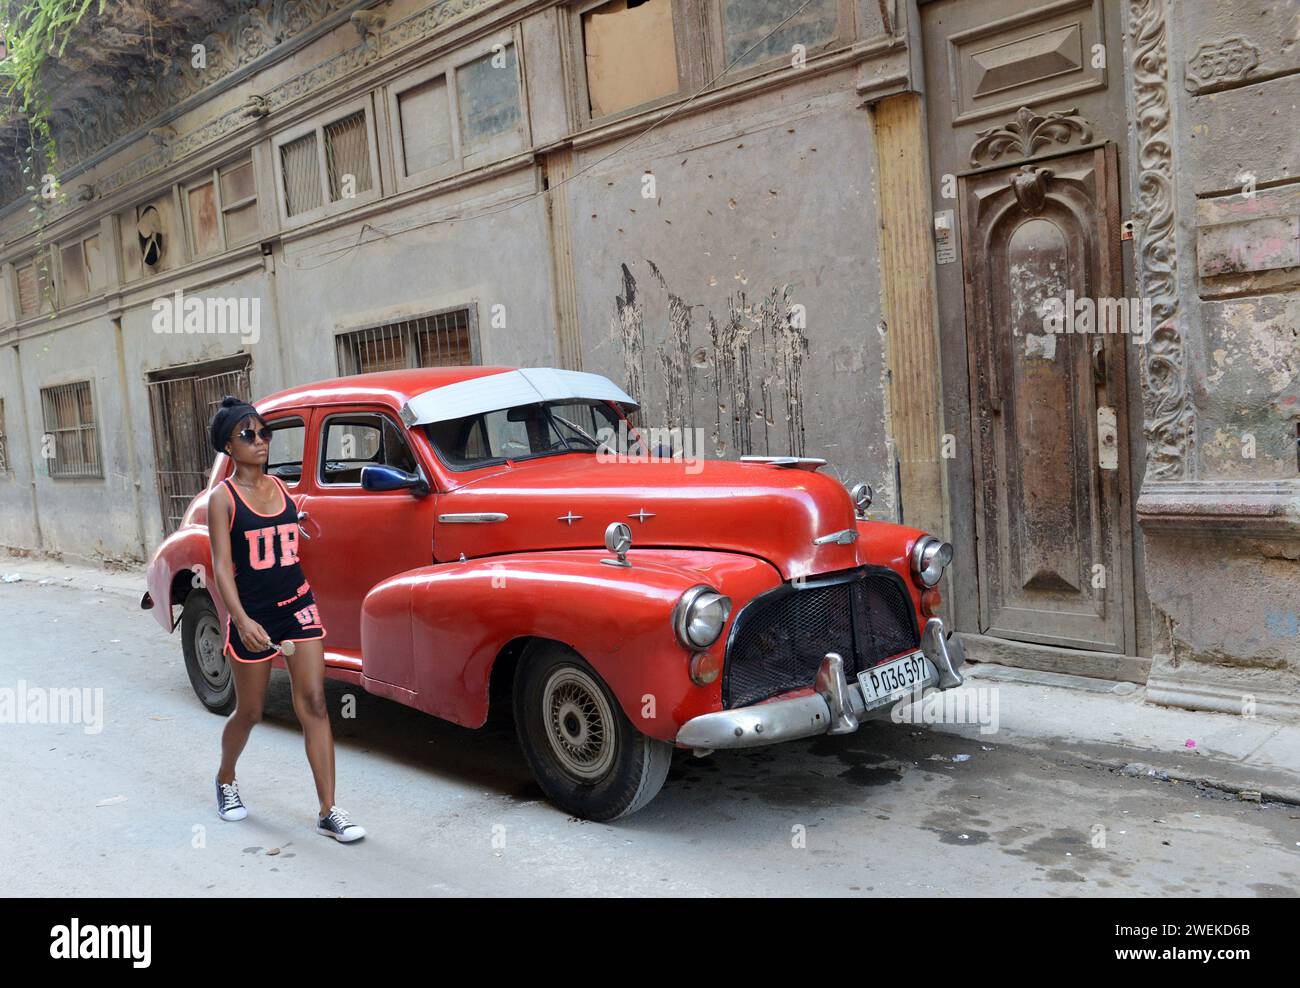 A Cuban woman walking by a vintage Chevrolet car in old Havana, Cuba. Stock Photo